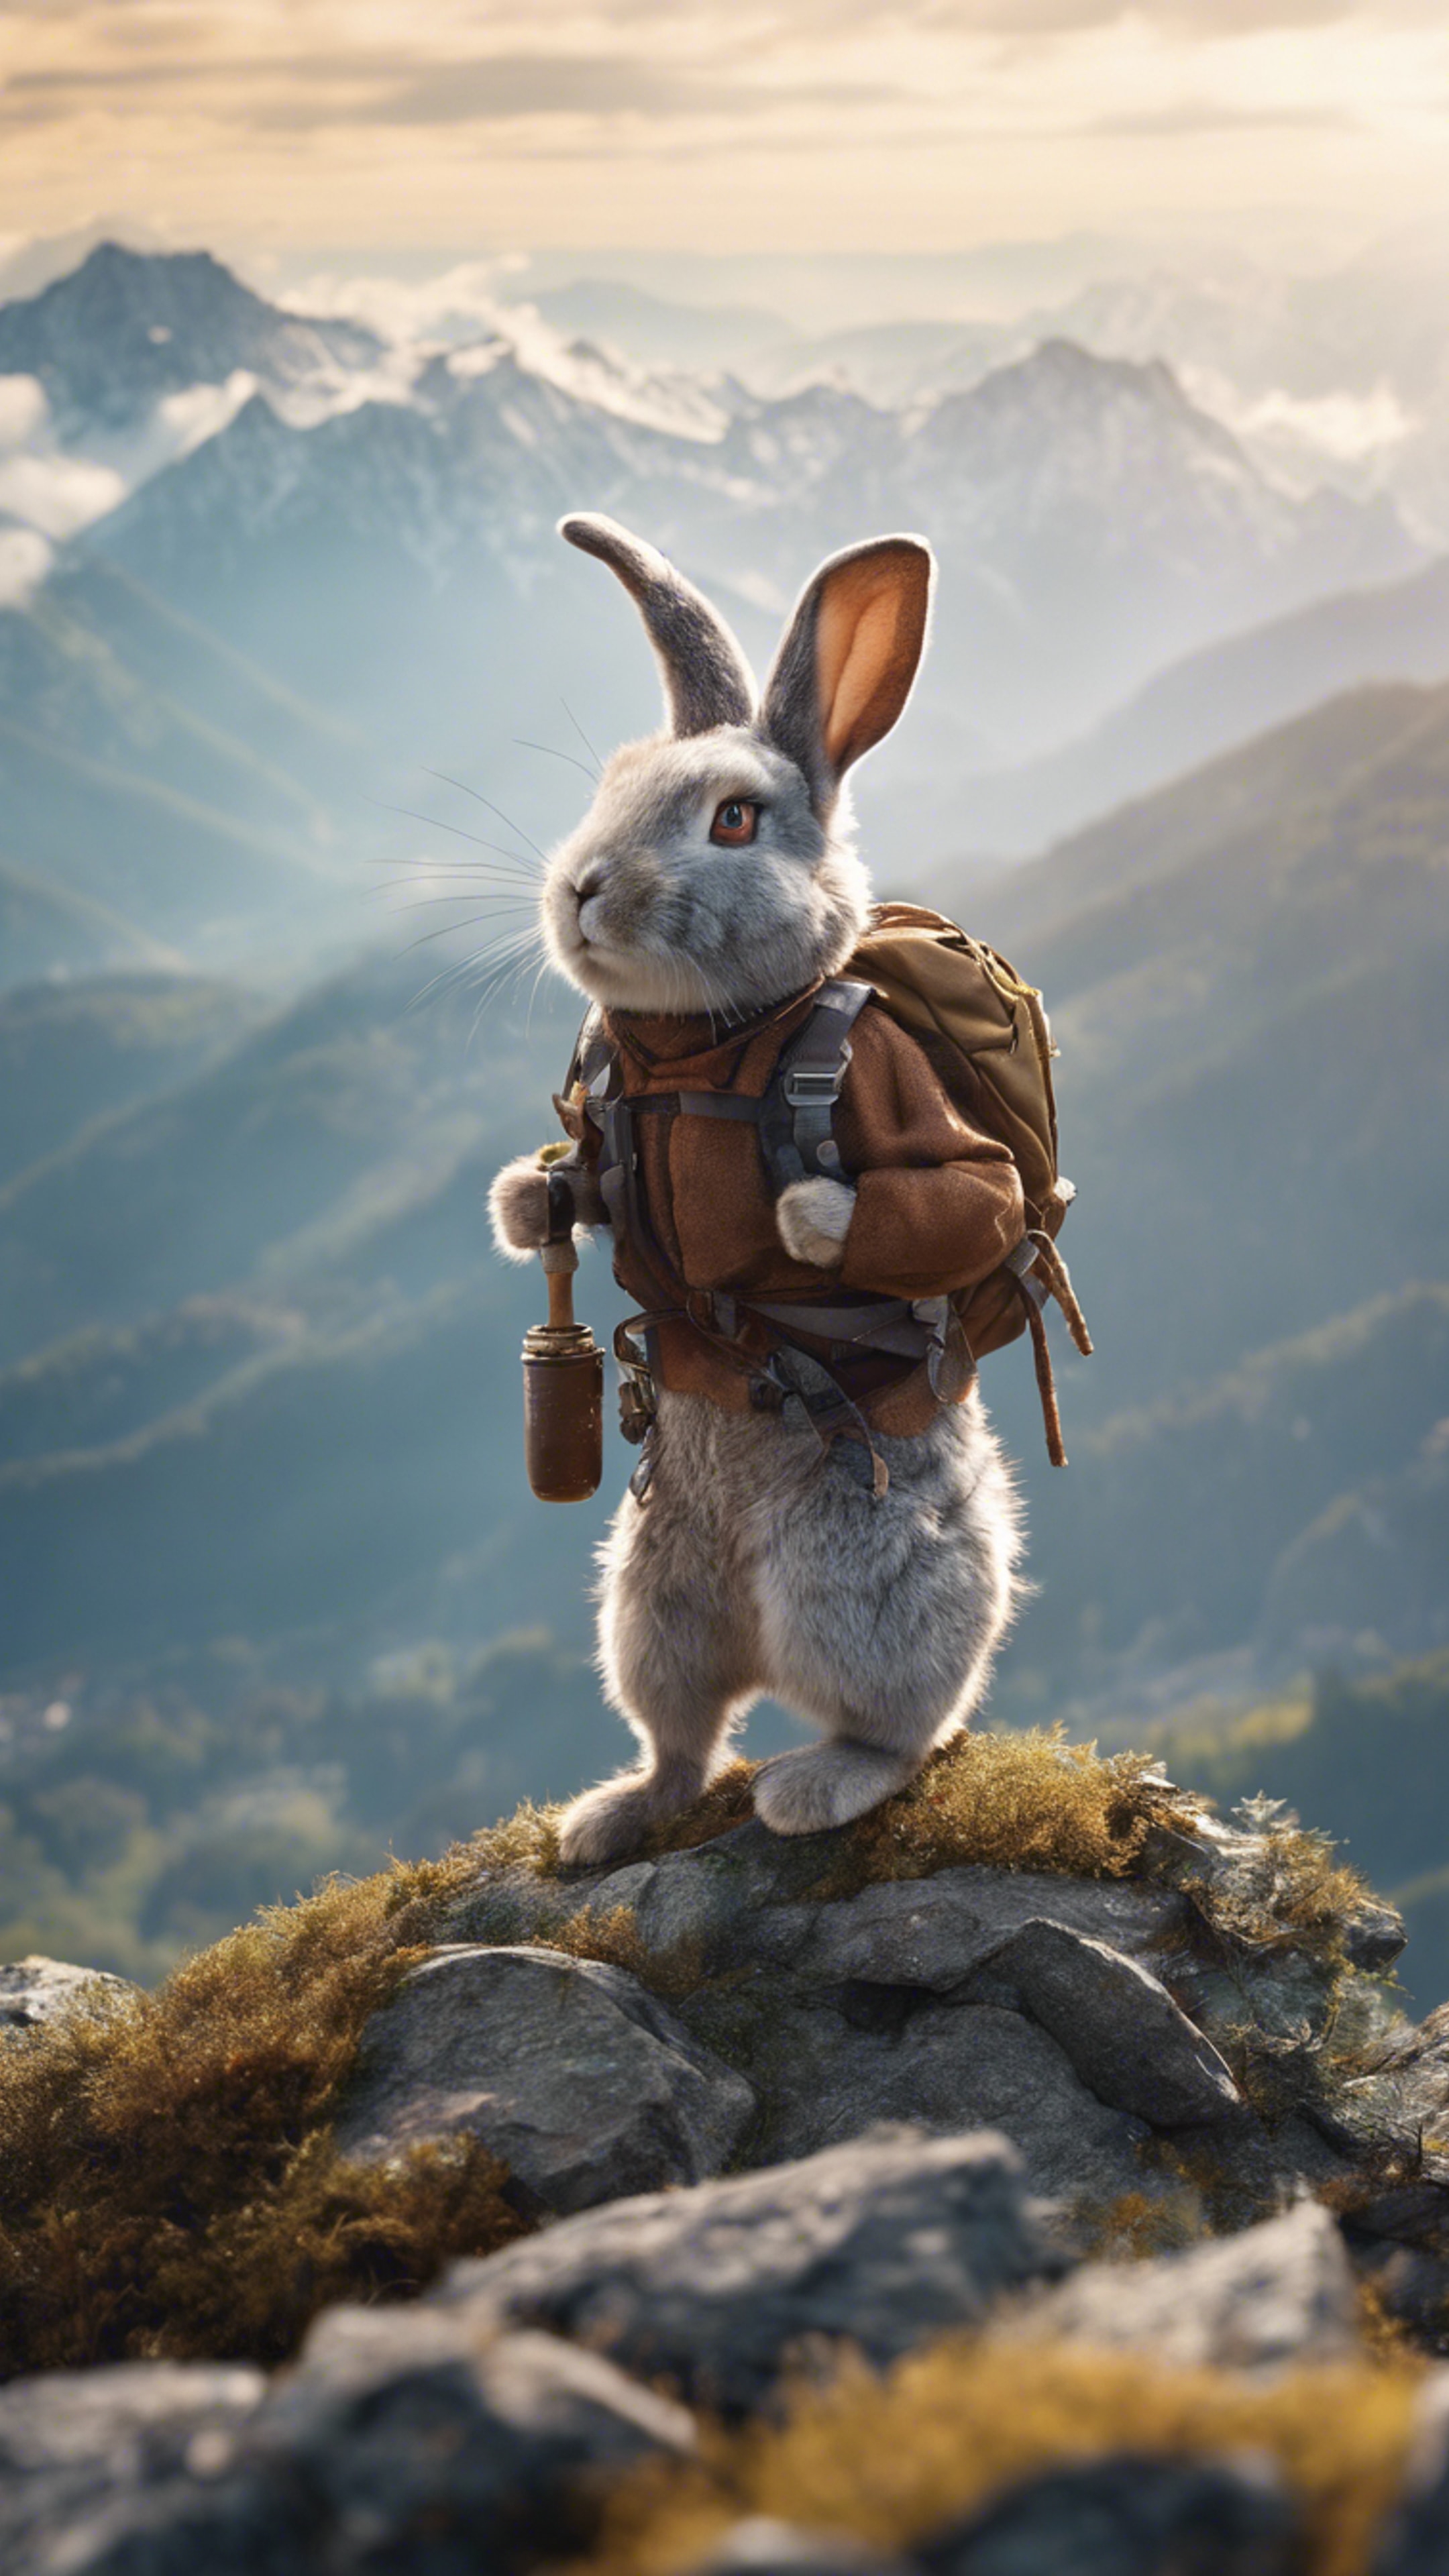 A Rabbit mountaineer conquering a treacherous peak. Tapeta[faadaab6eec04e17a877]